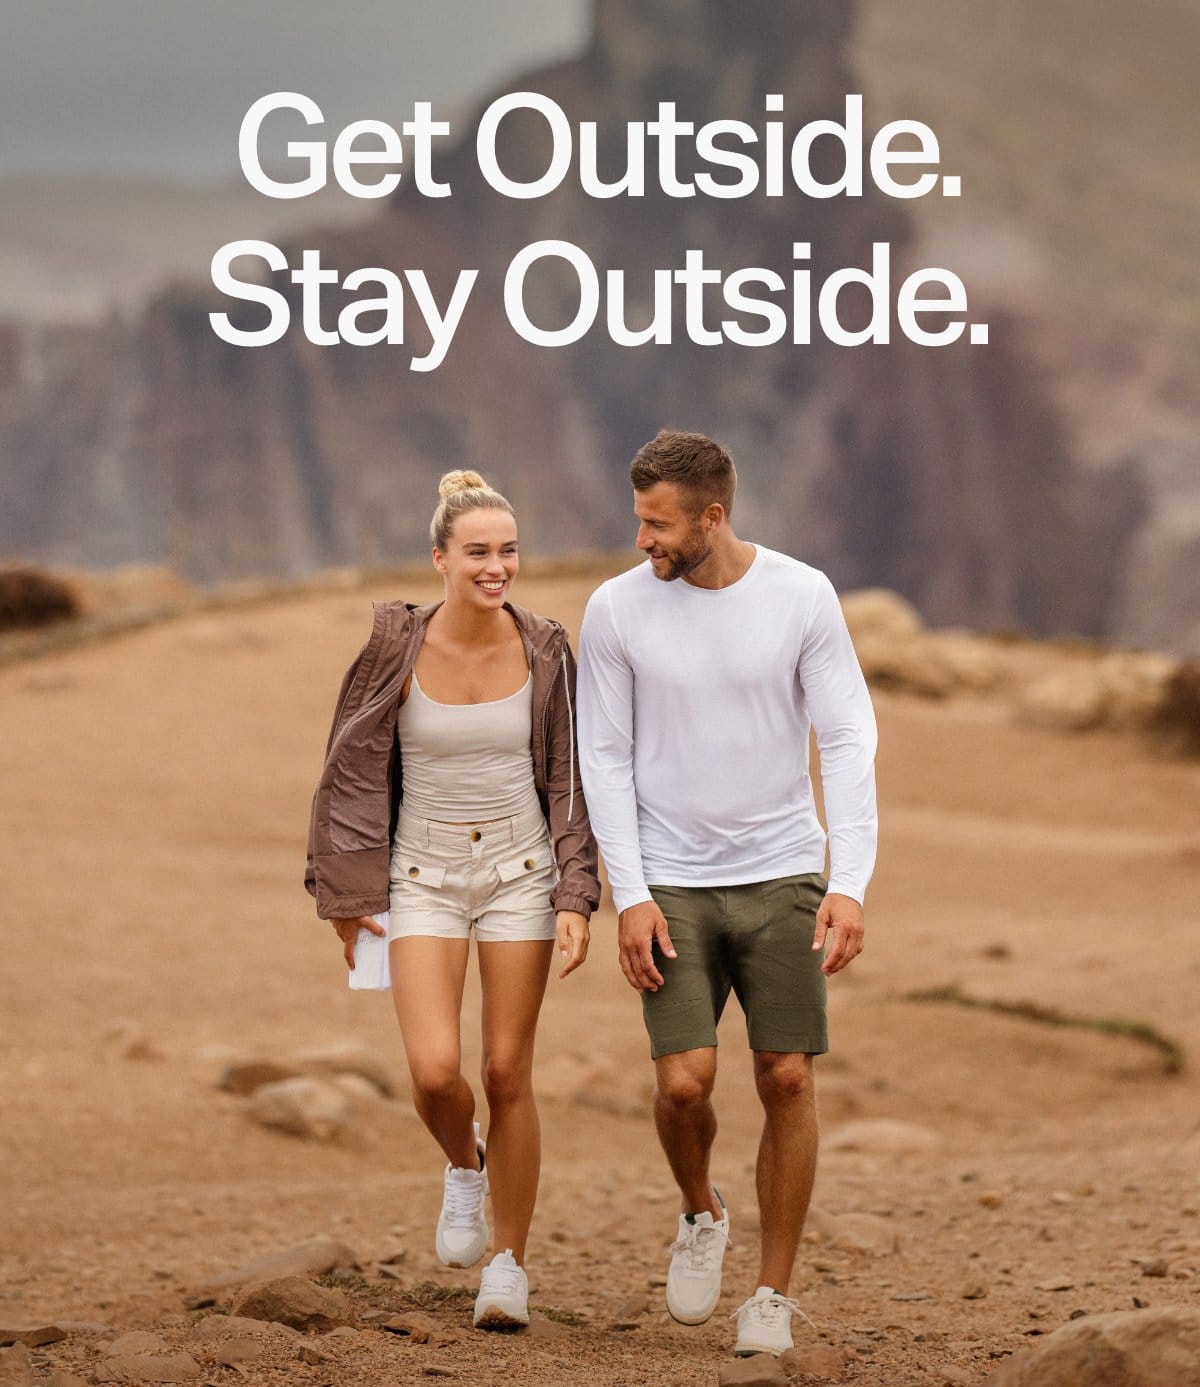 Get Outside. Stay Outside.